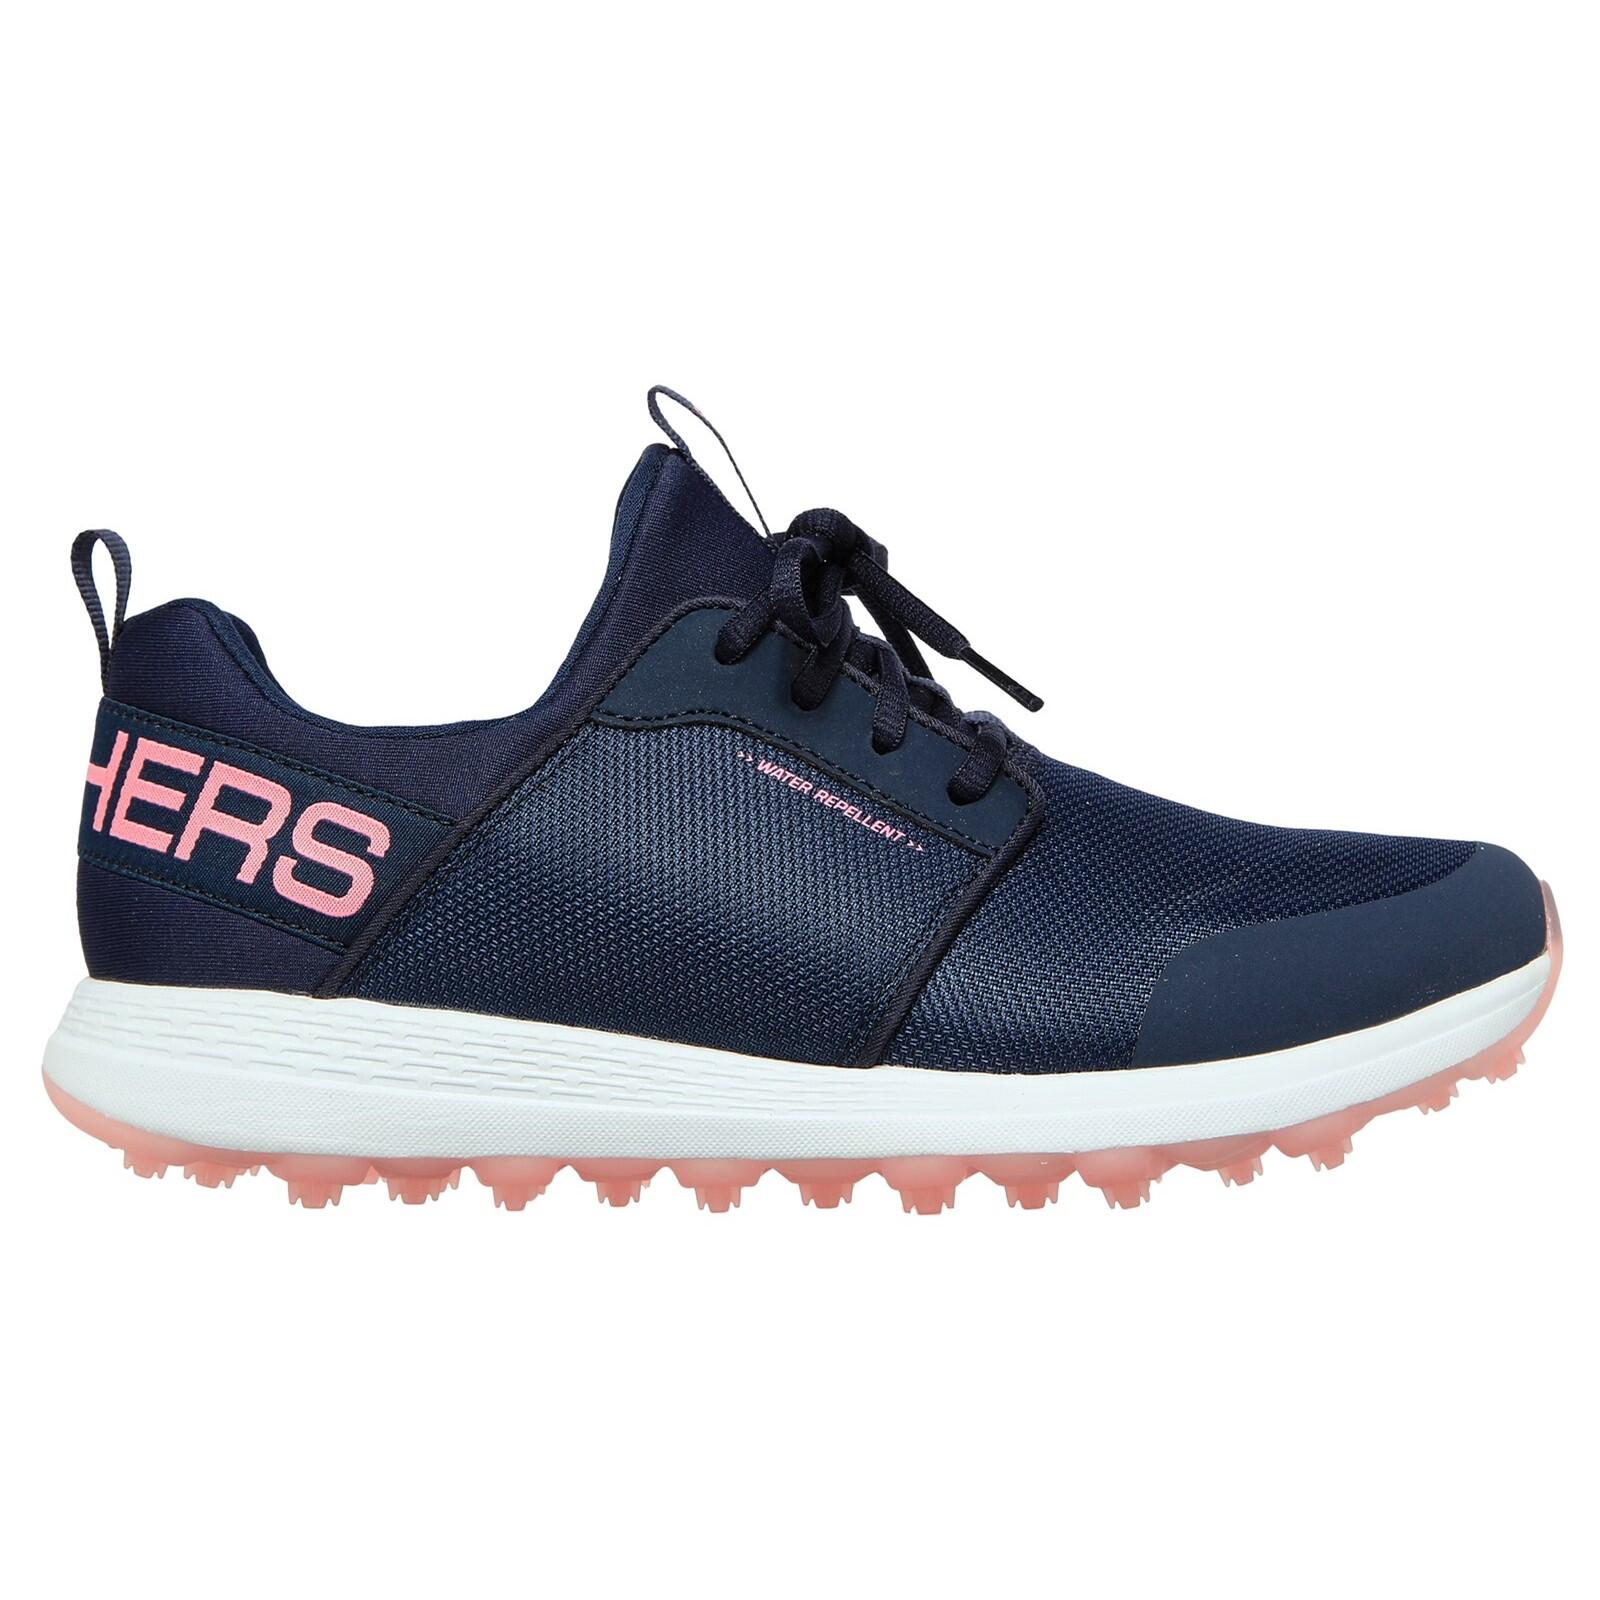 SKECHERS Go Golf Max Sport Golf Shoes Navy blue